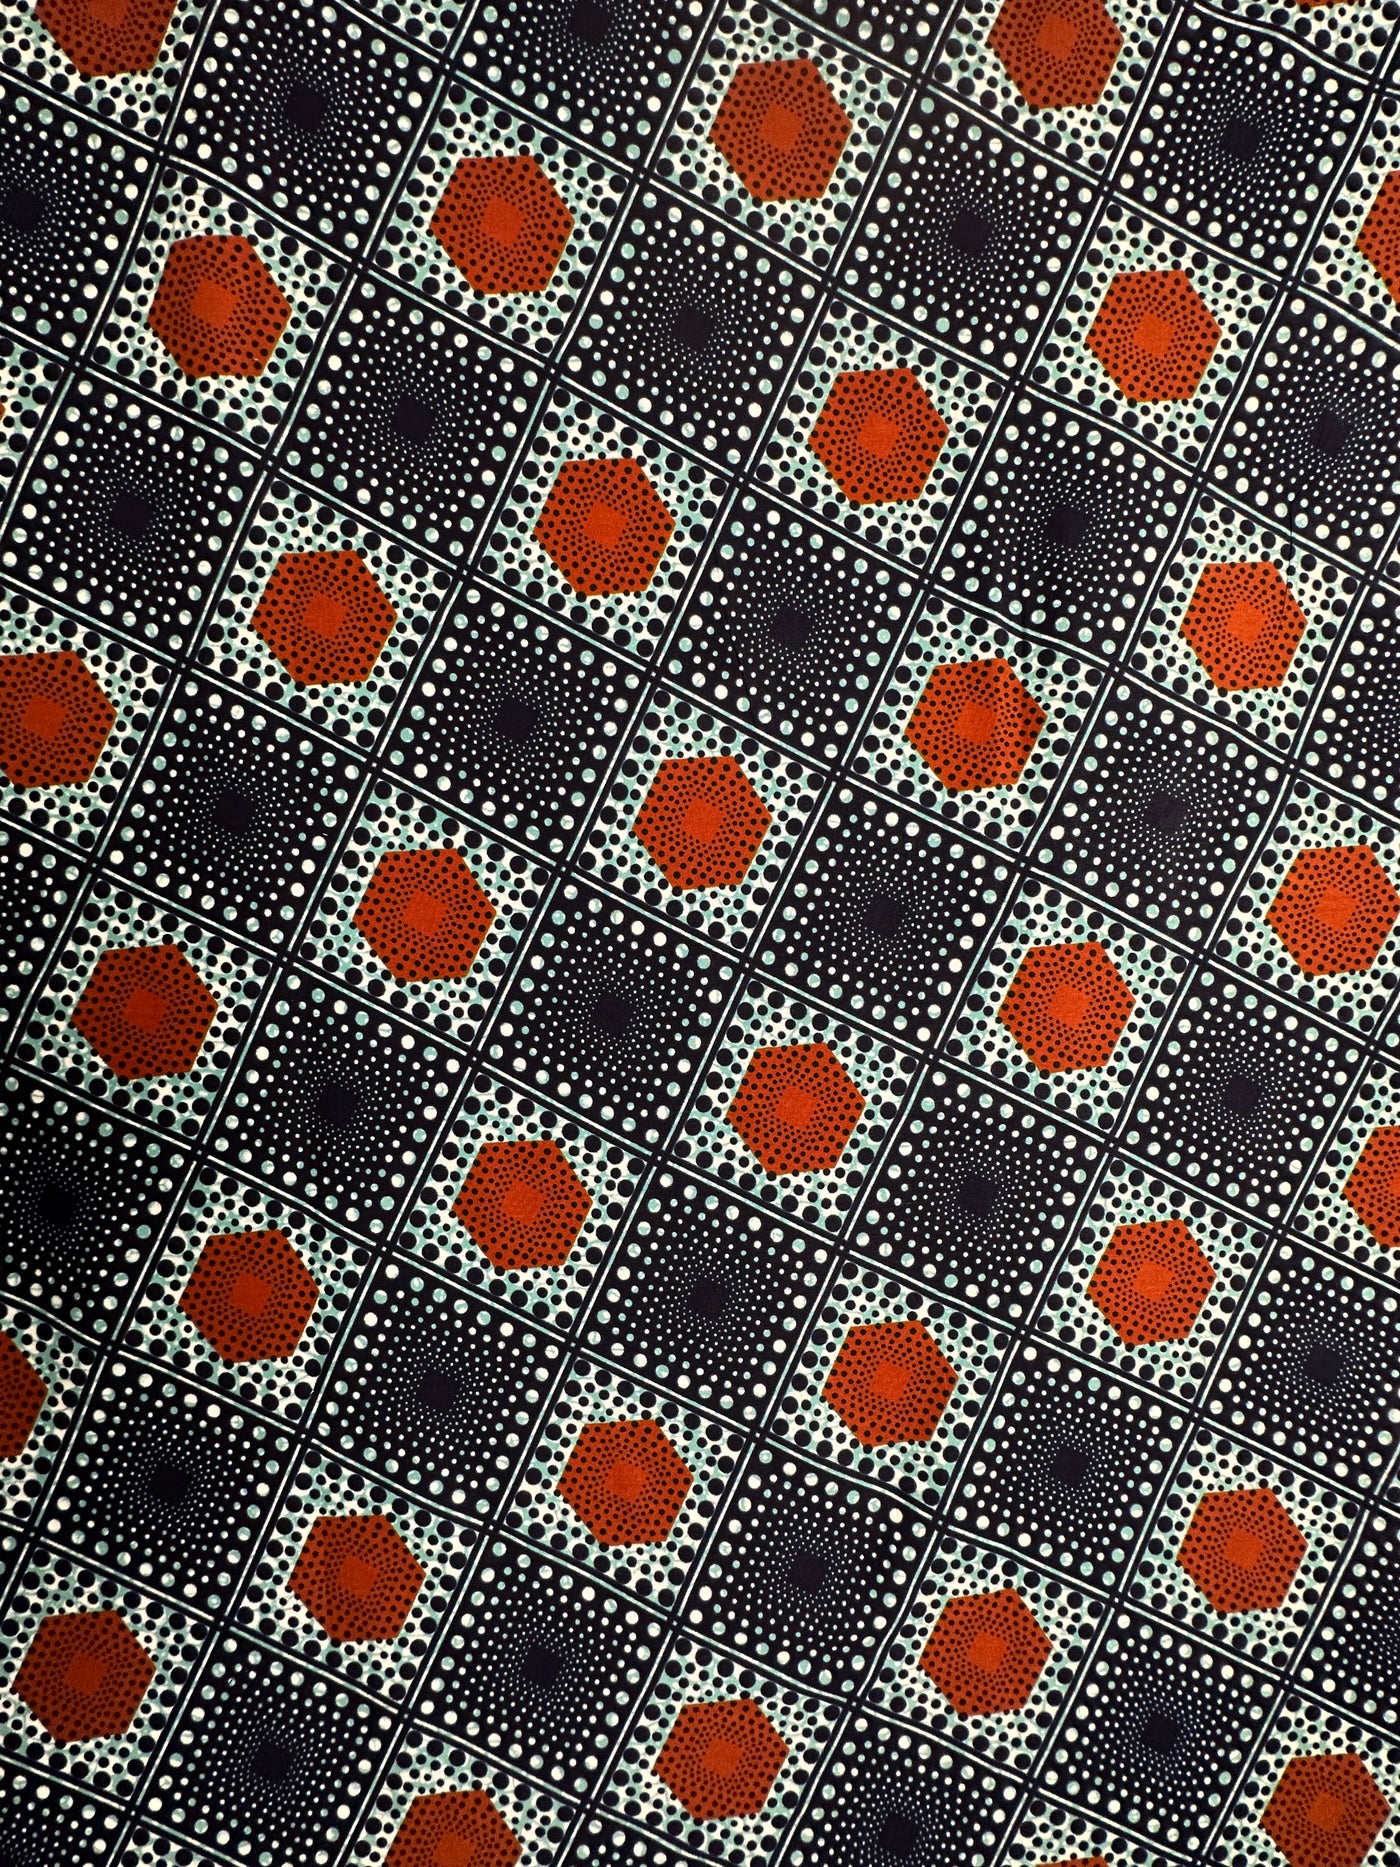 Ankara Fabric - 3156520